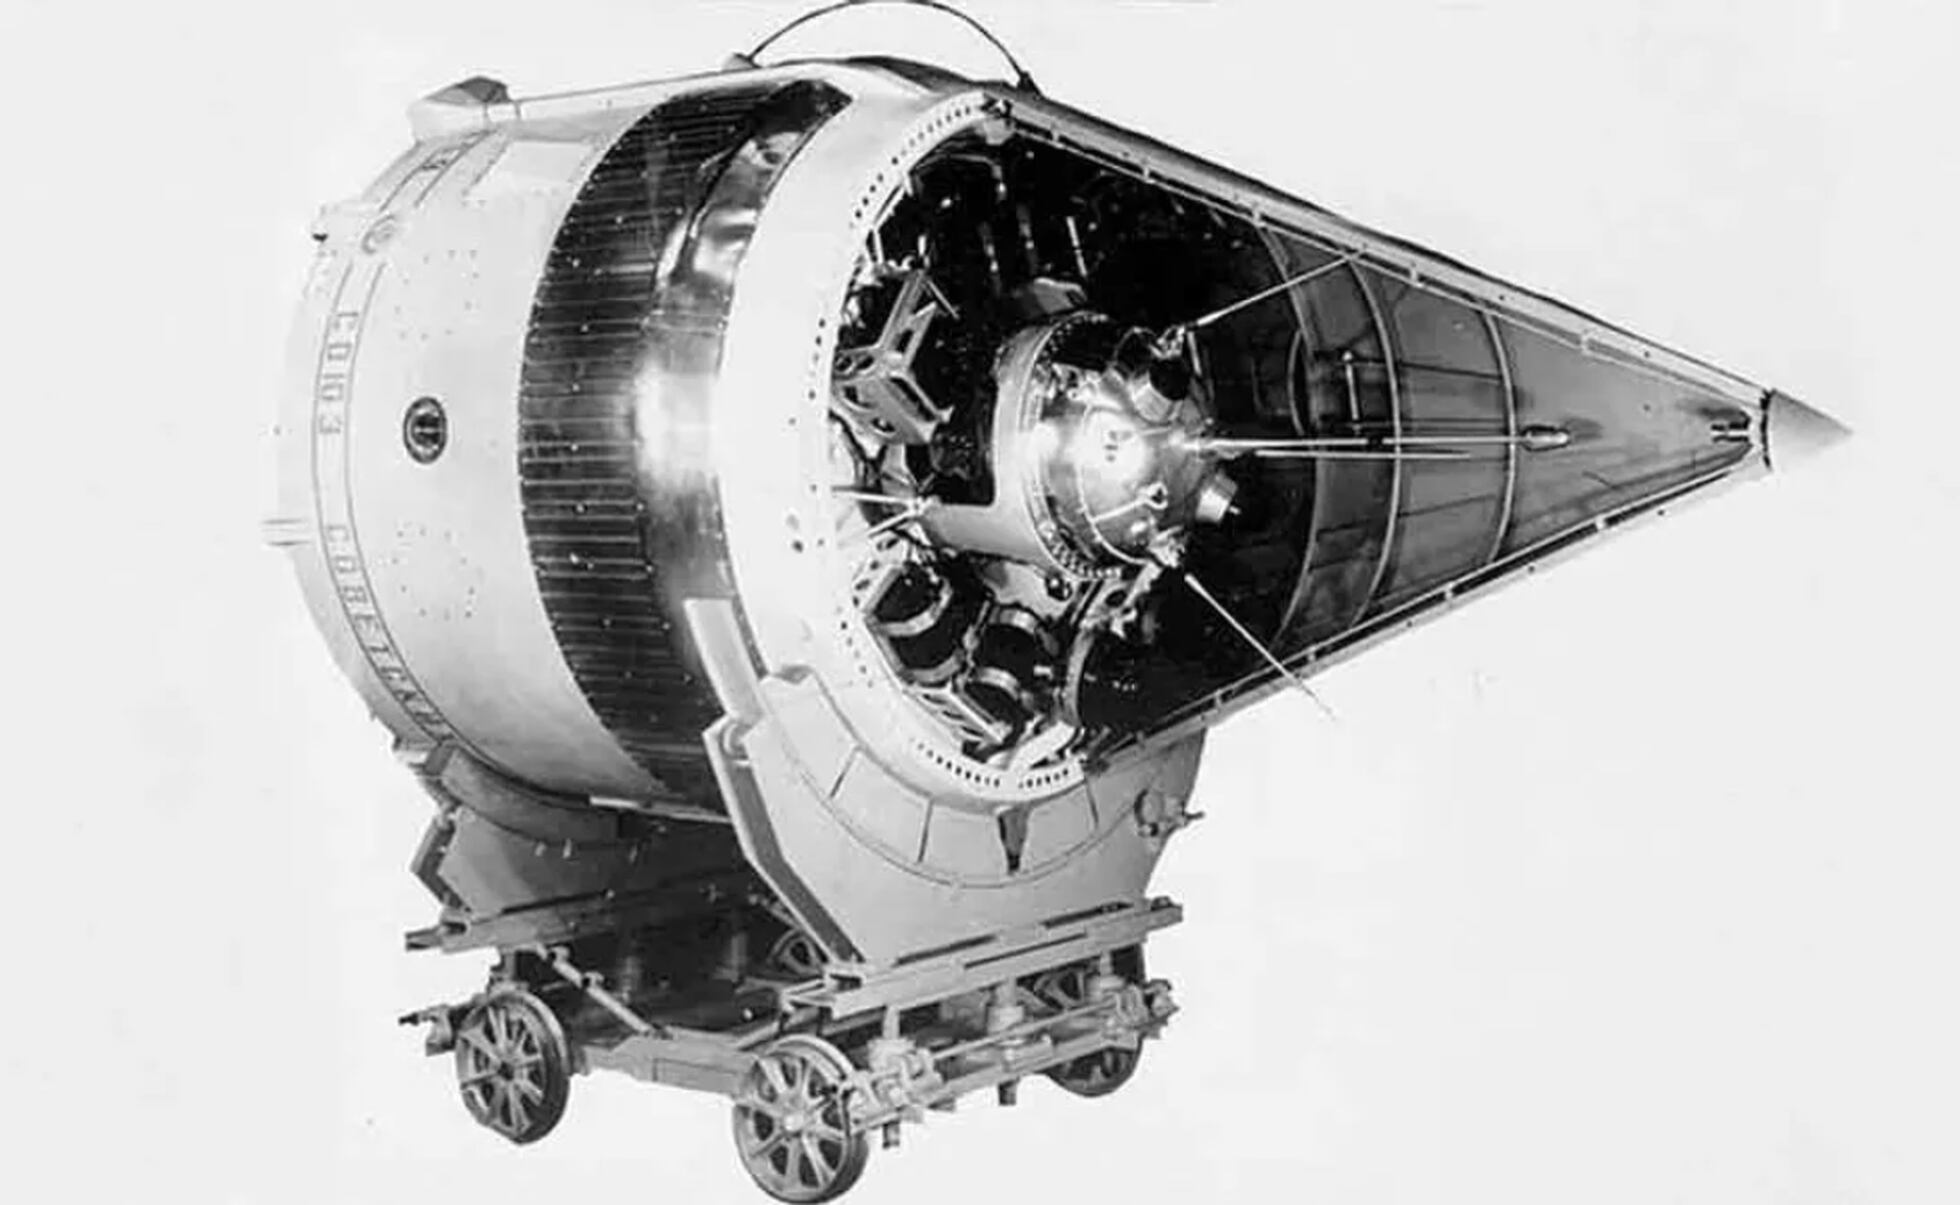 soviet lunar manned programs